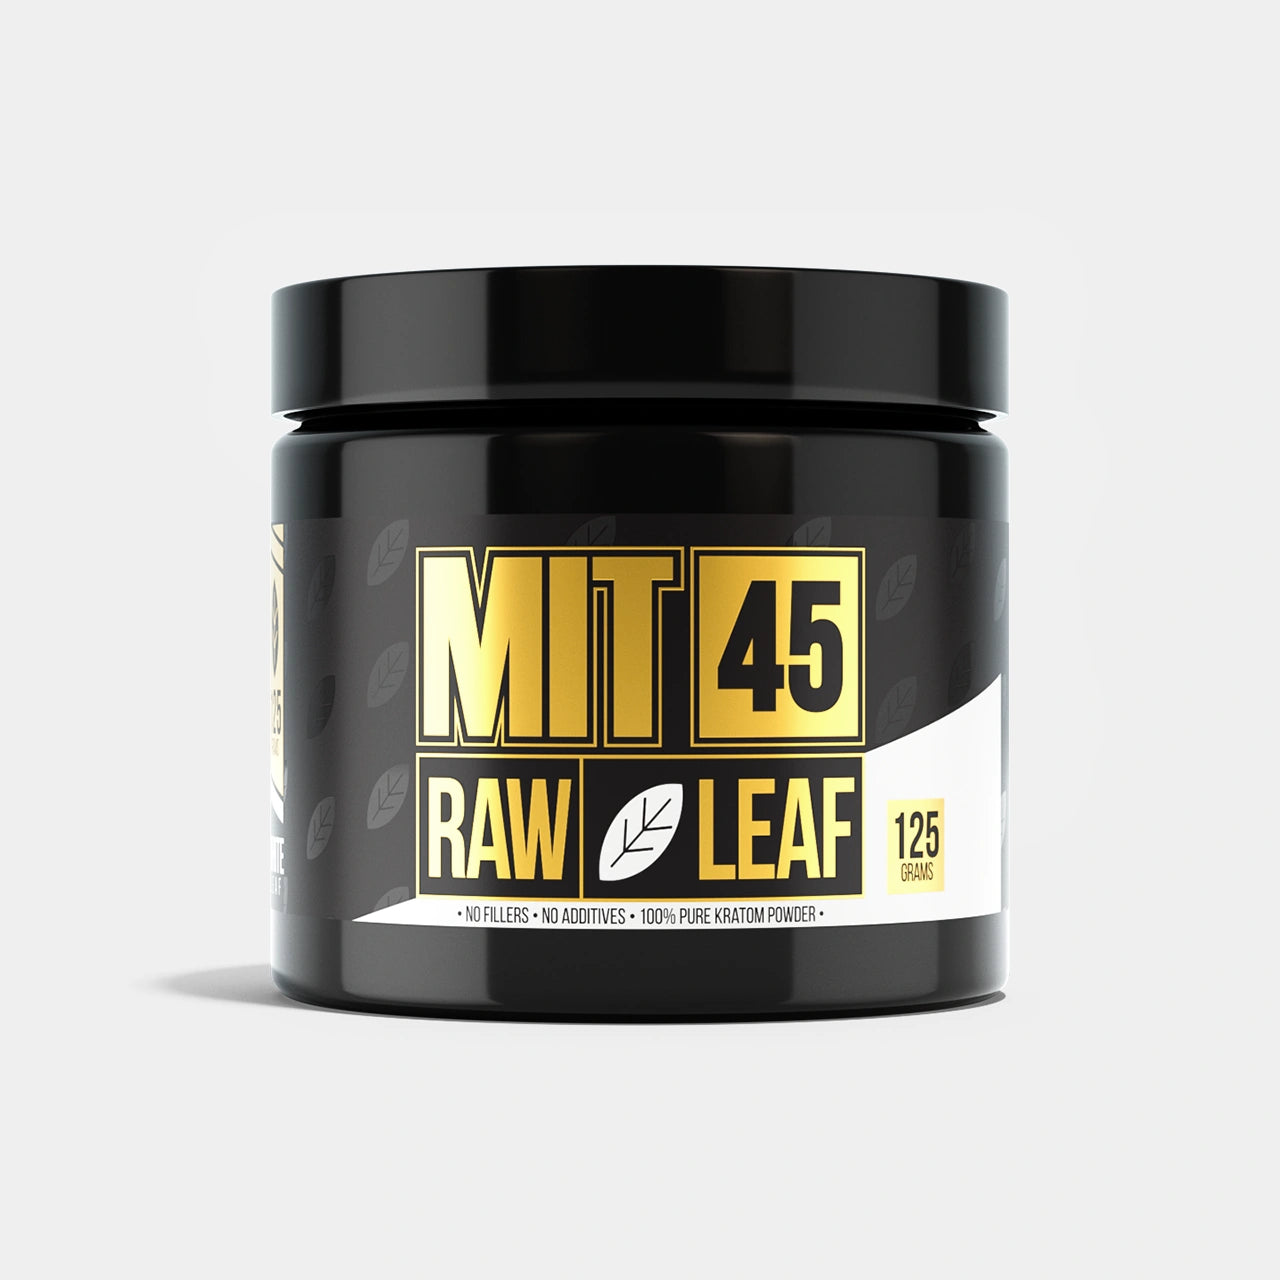 MIT 45 Kratom Raw White Leaf Powder